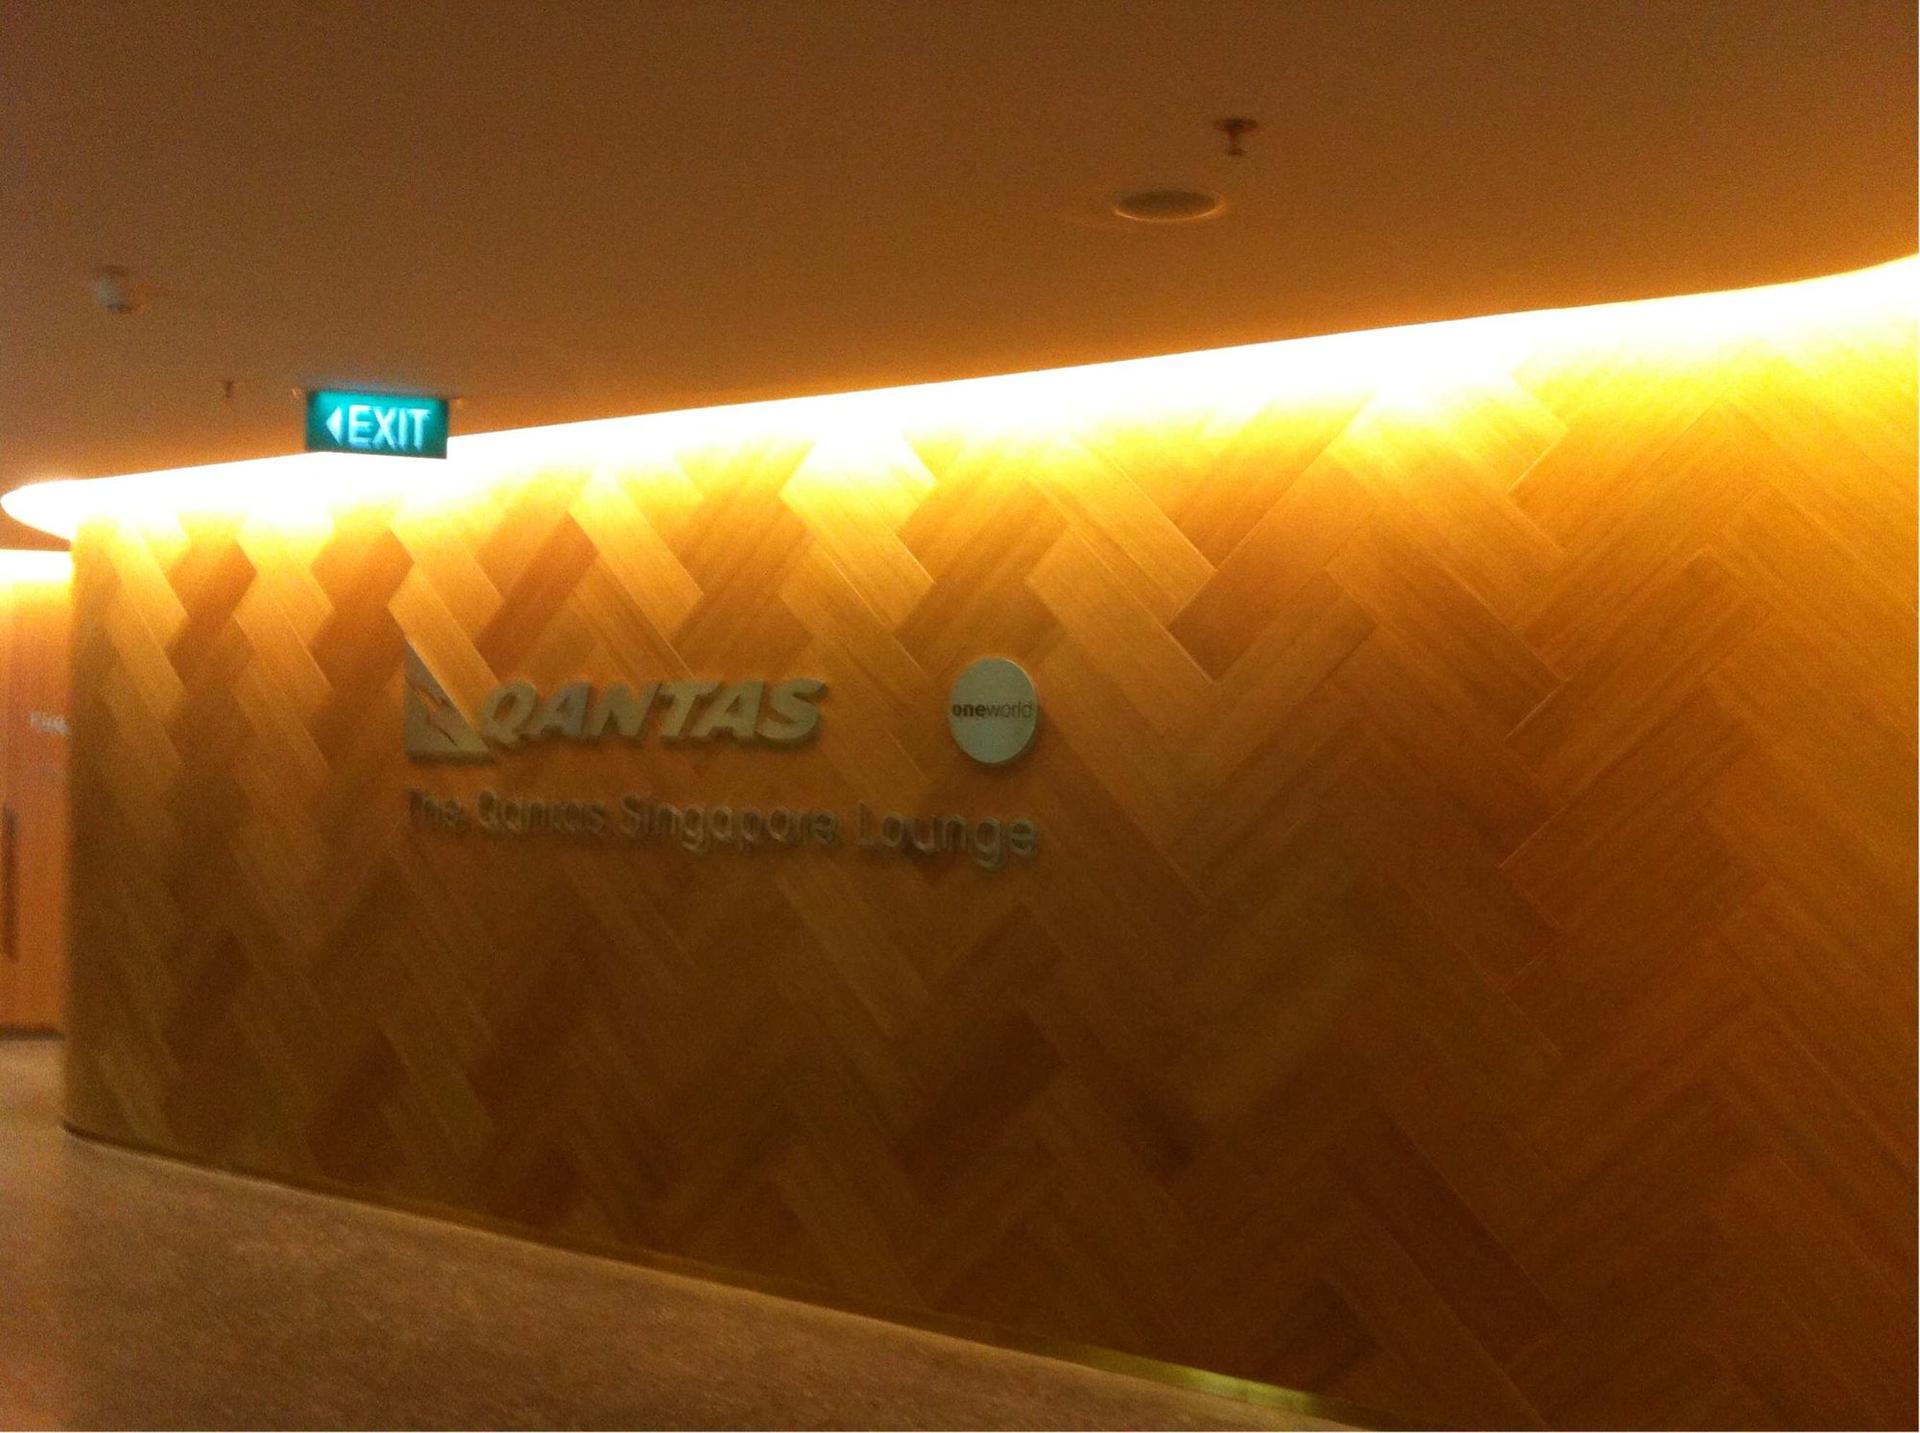 The Qantas Singapore Lounge image 3 of 49